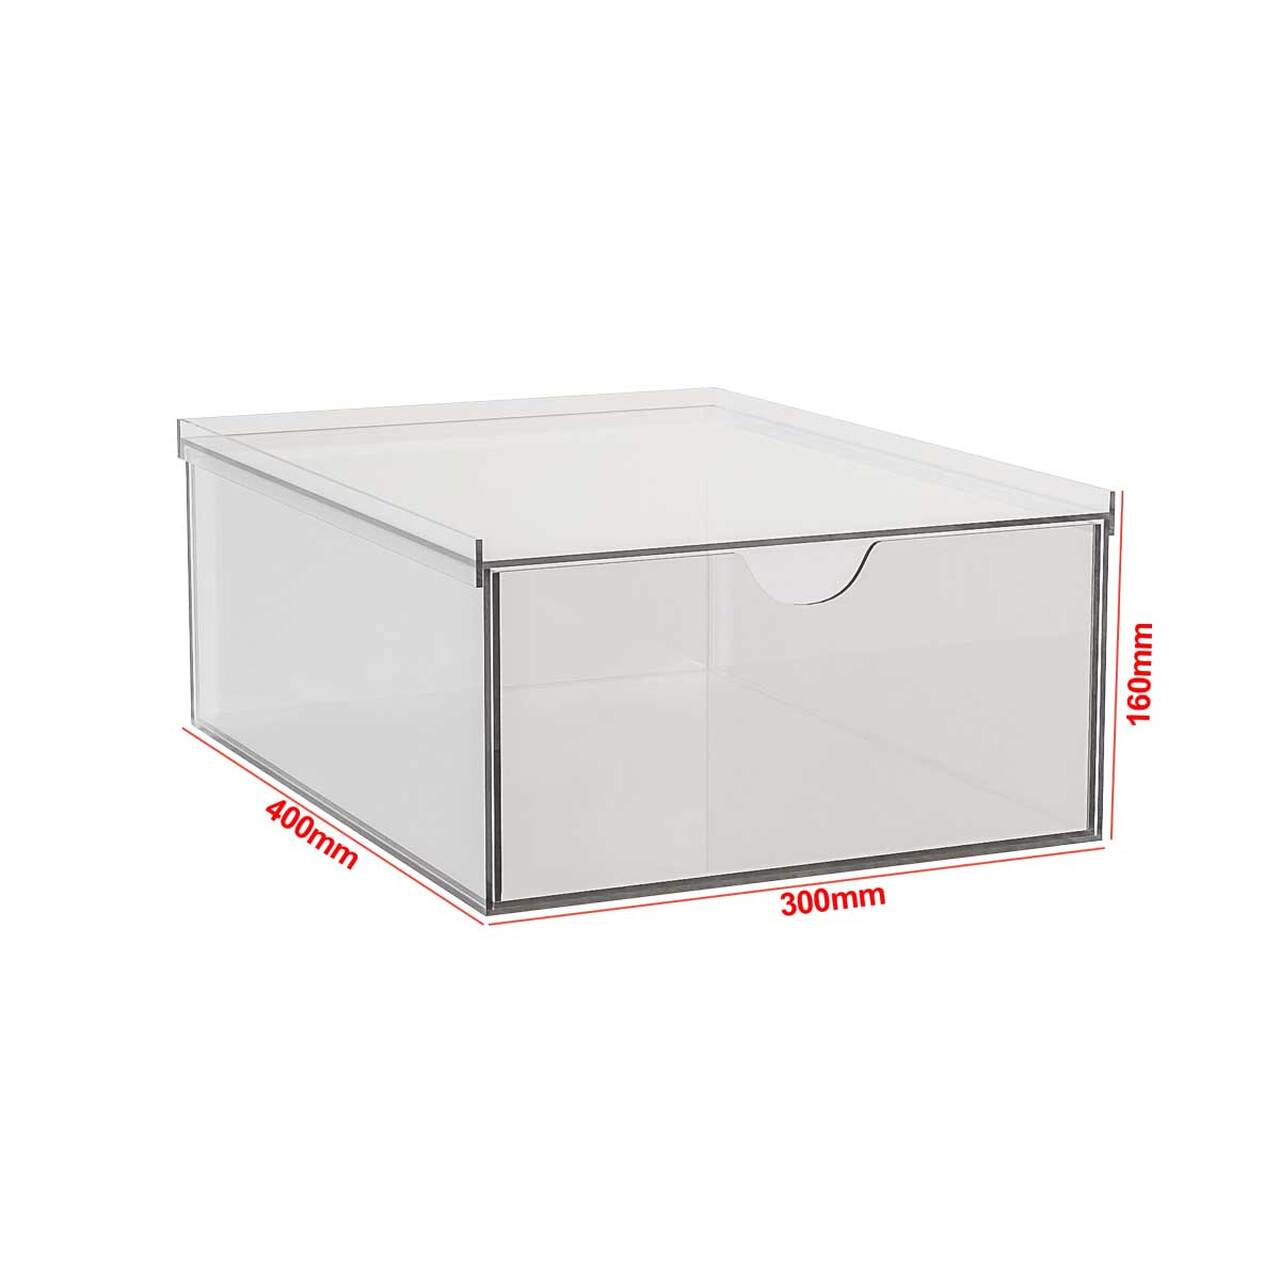  Cutie organizatoare modulara cu 1 sertar, 300(l)x400(L)x160(h)mm, pentru cafea, ceai etc, JJ DISPLAYS